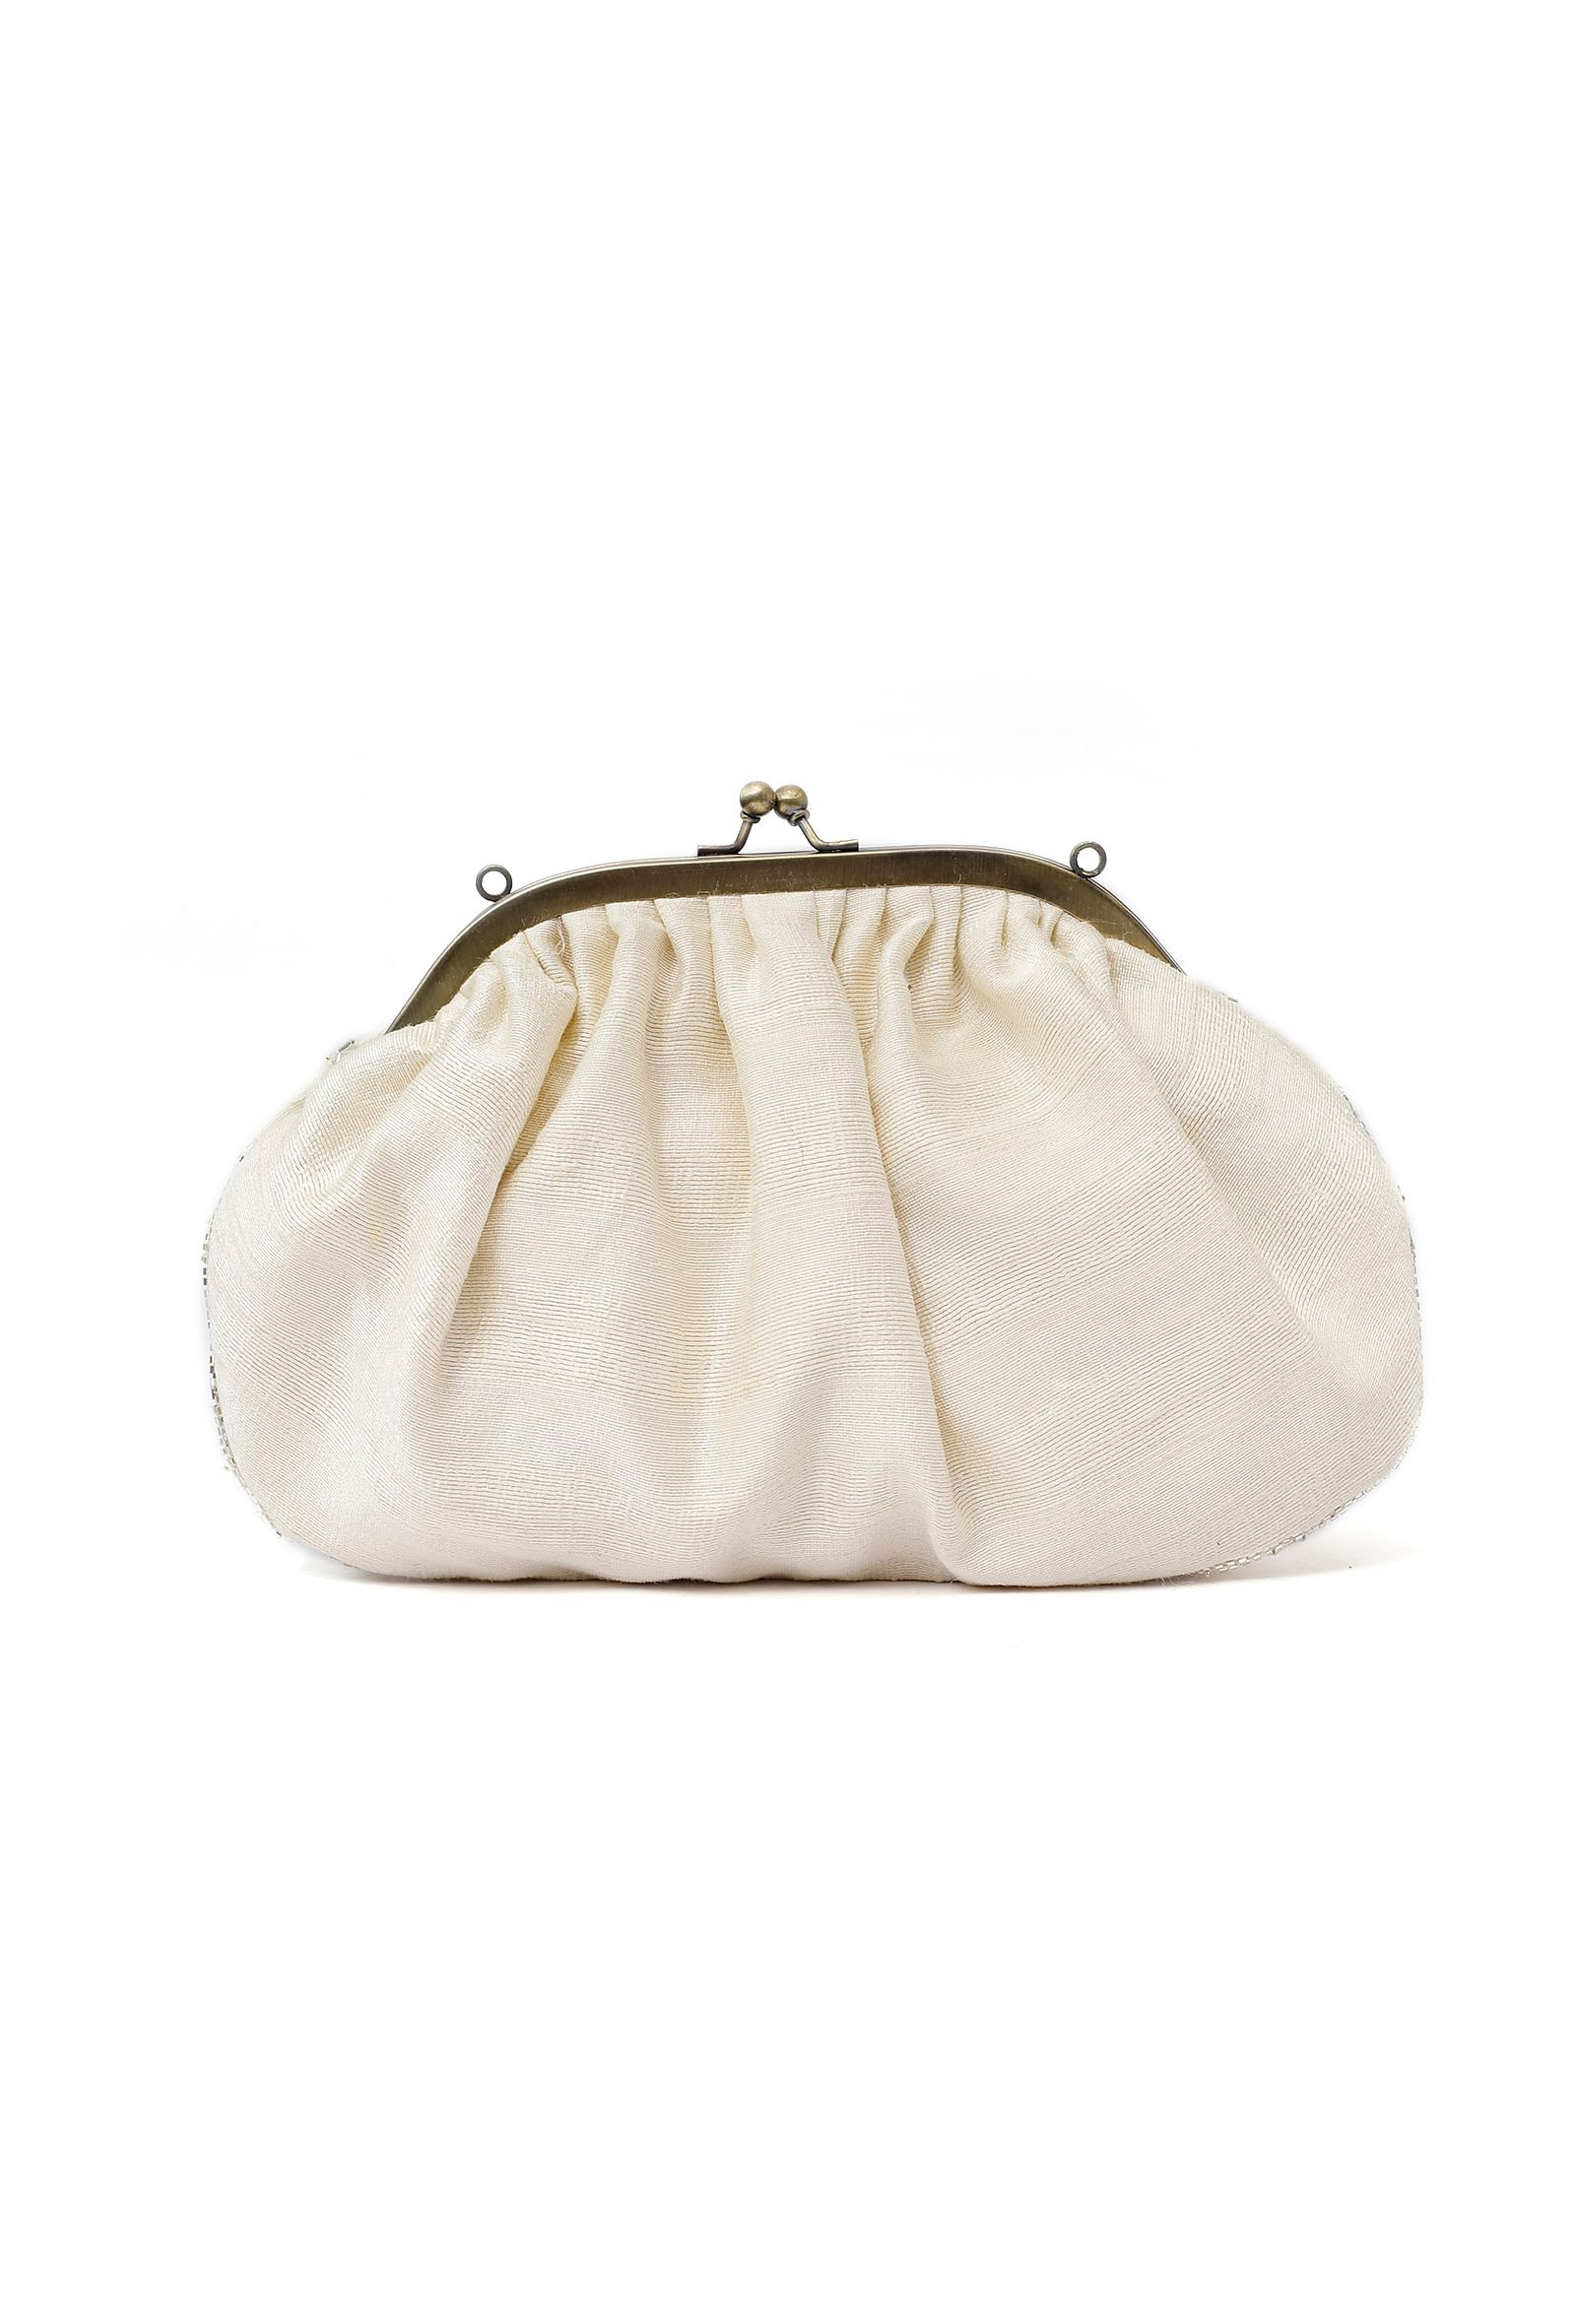 Amaira White Embellished Clutch Bag